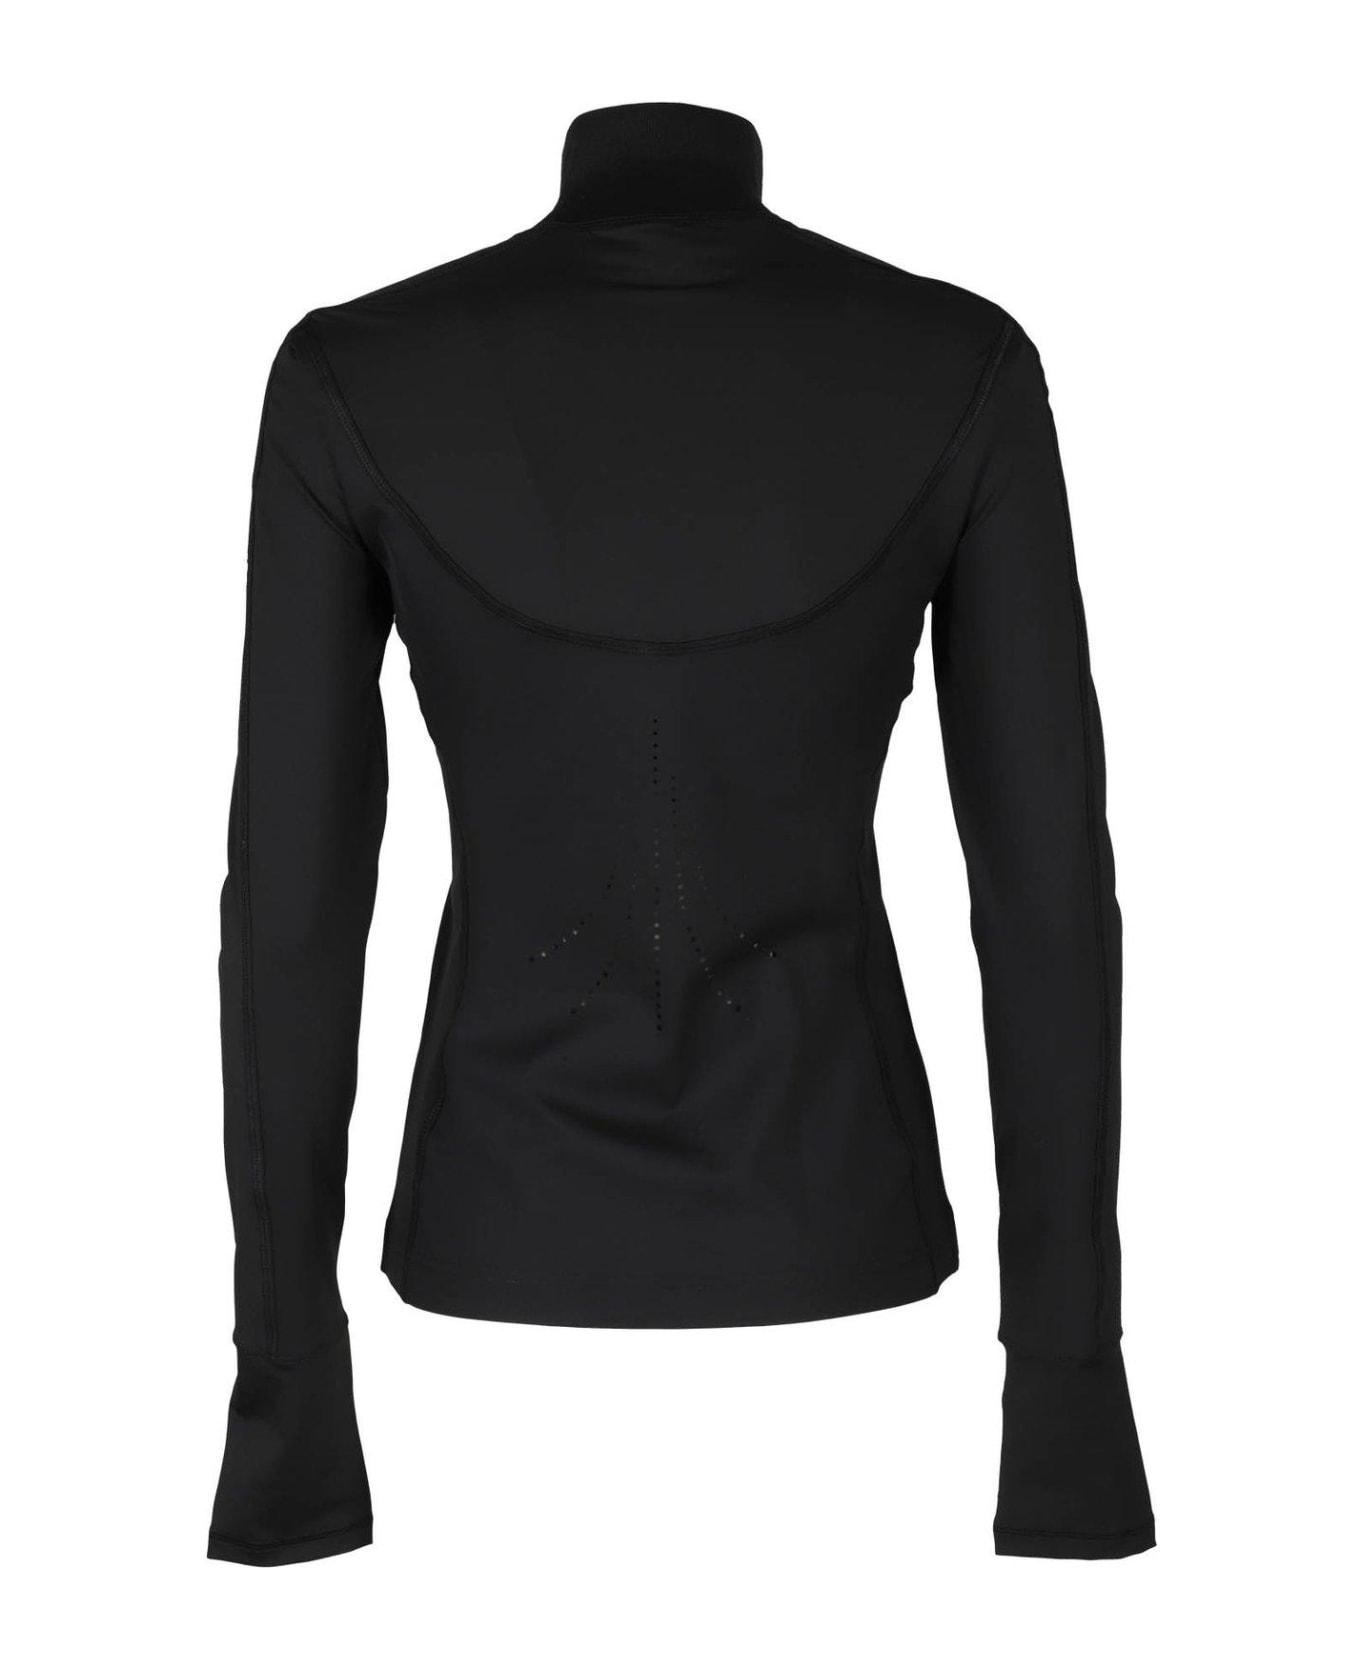 Adidas by Stella McCartney Truepurpose High-neck Training Jacket - Black ジャケット